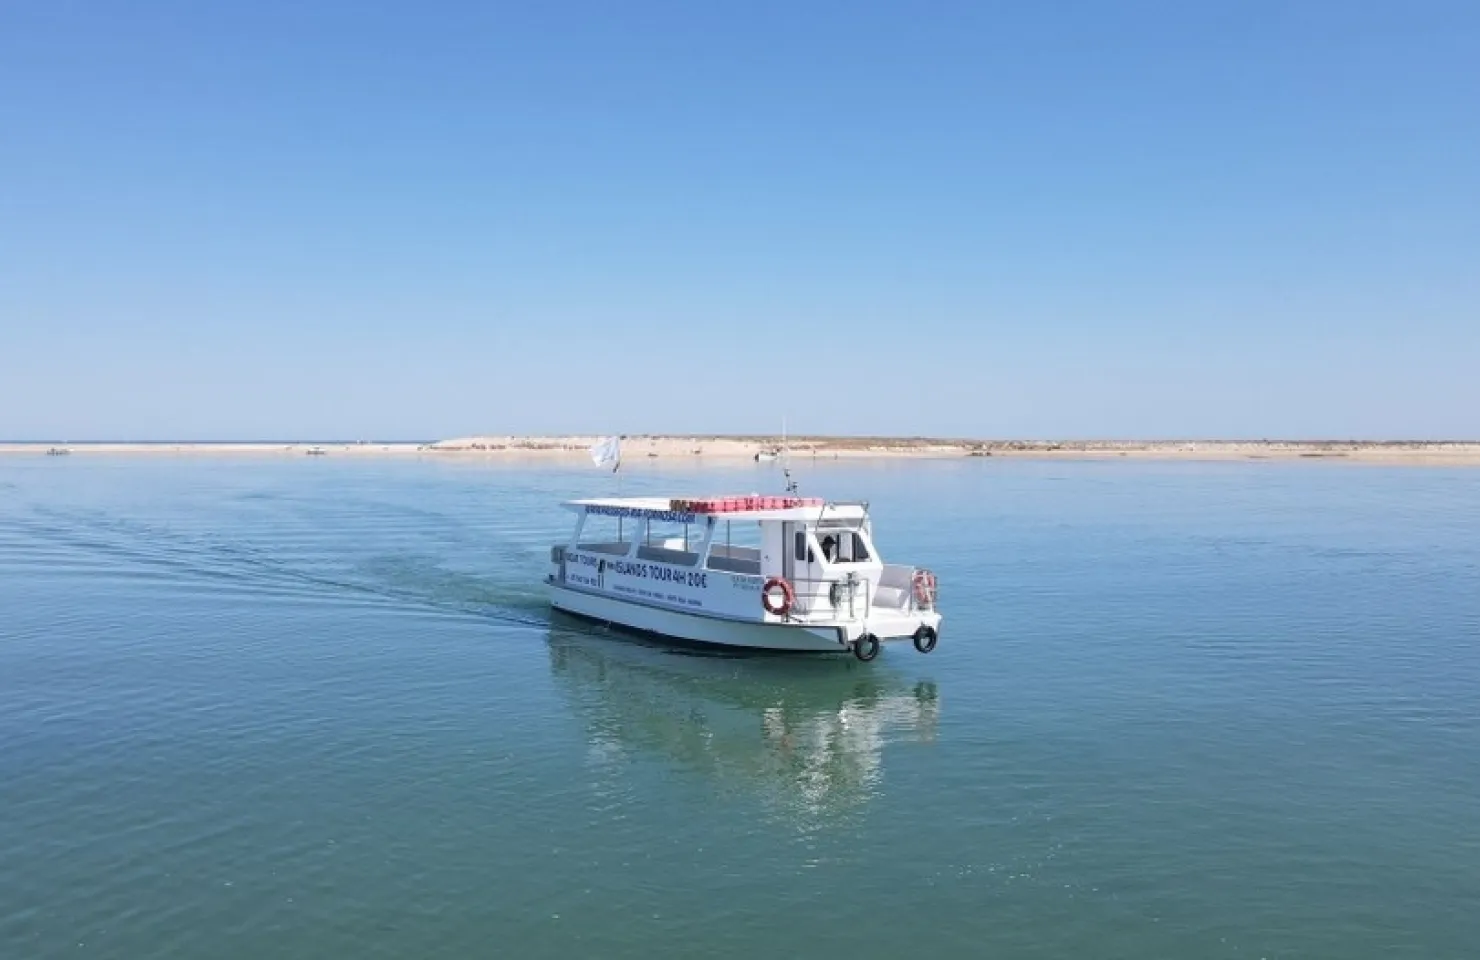 Ria Formosa Islands Boat Tour - Algarve's Ria Formosa: Ultimate Activity Guide